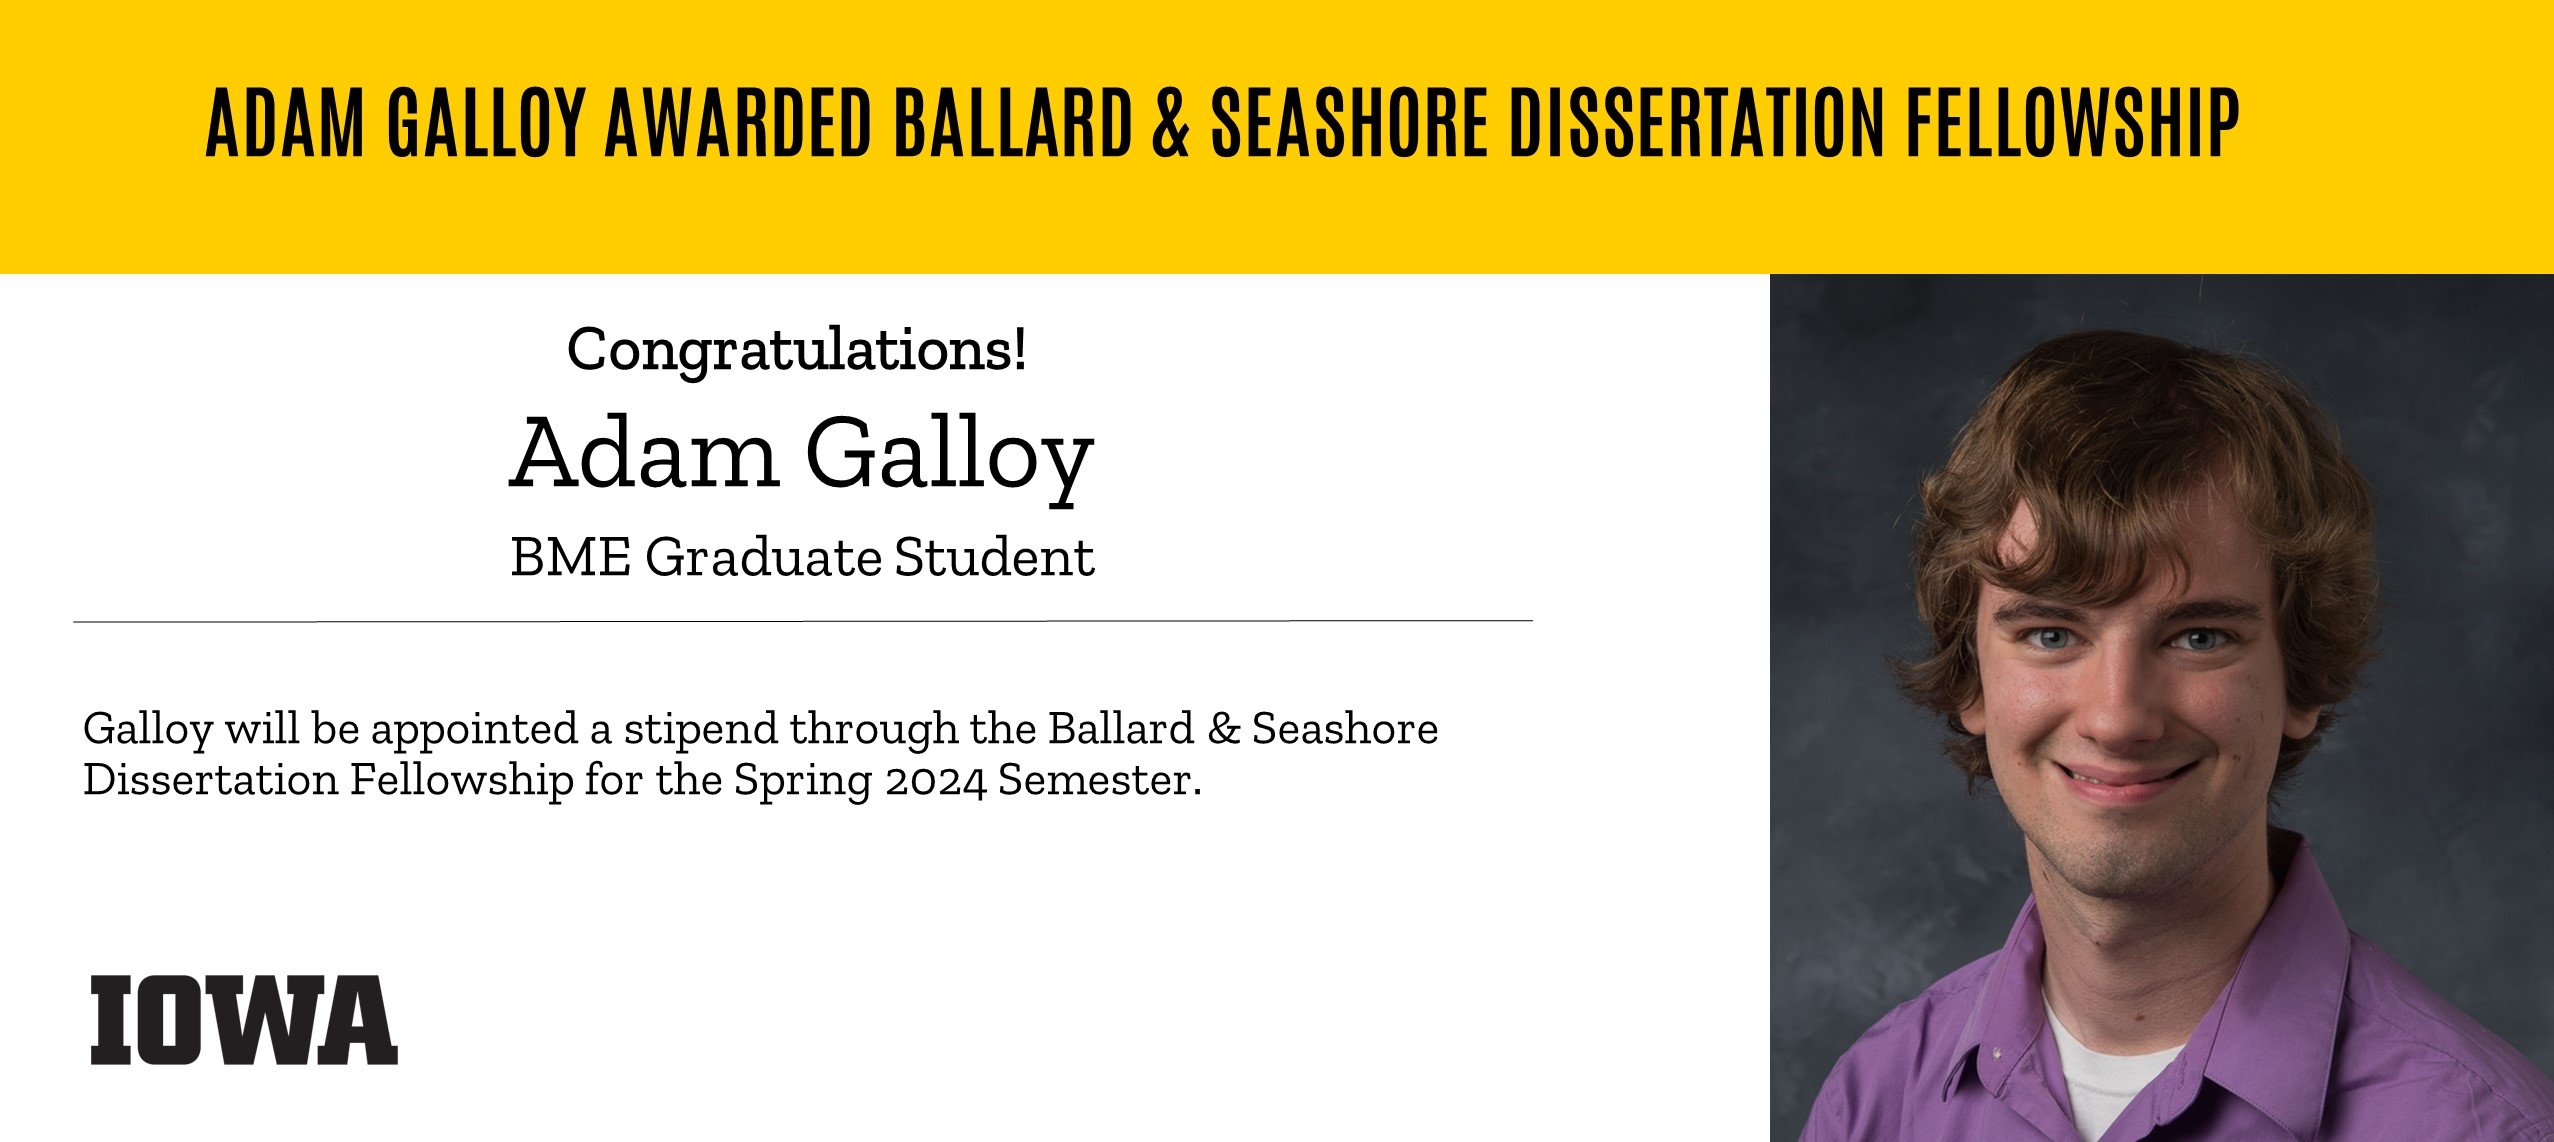 Ballard & Seashore Dissertation Fellowship Announcement - Galloy